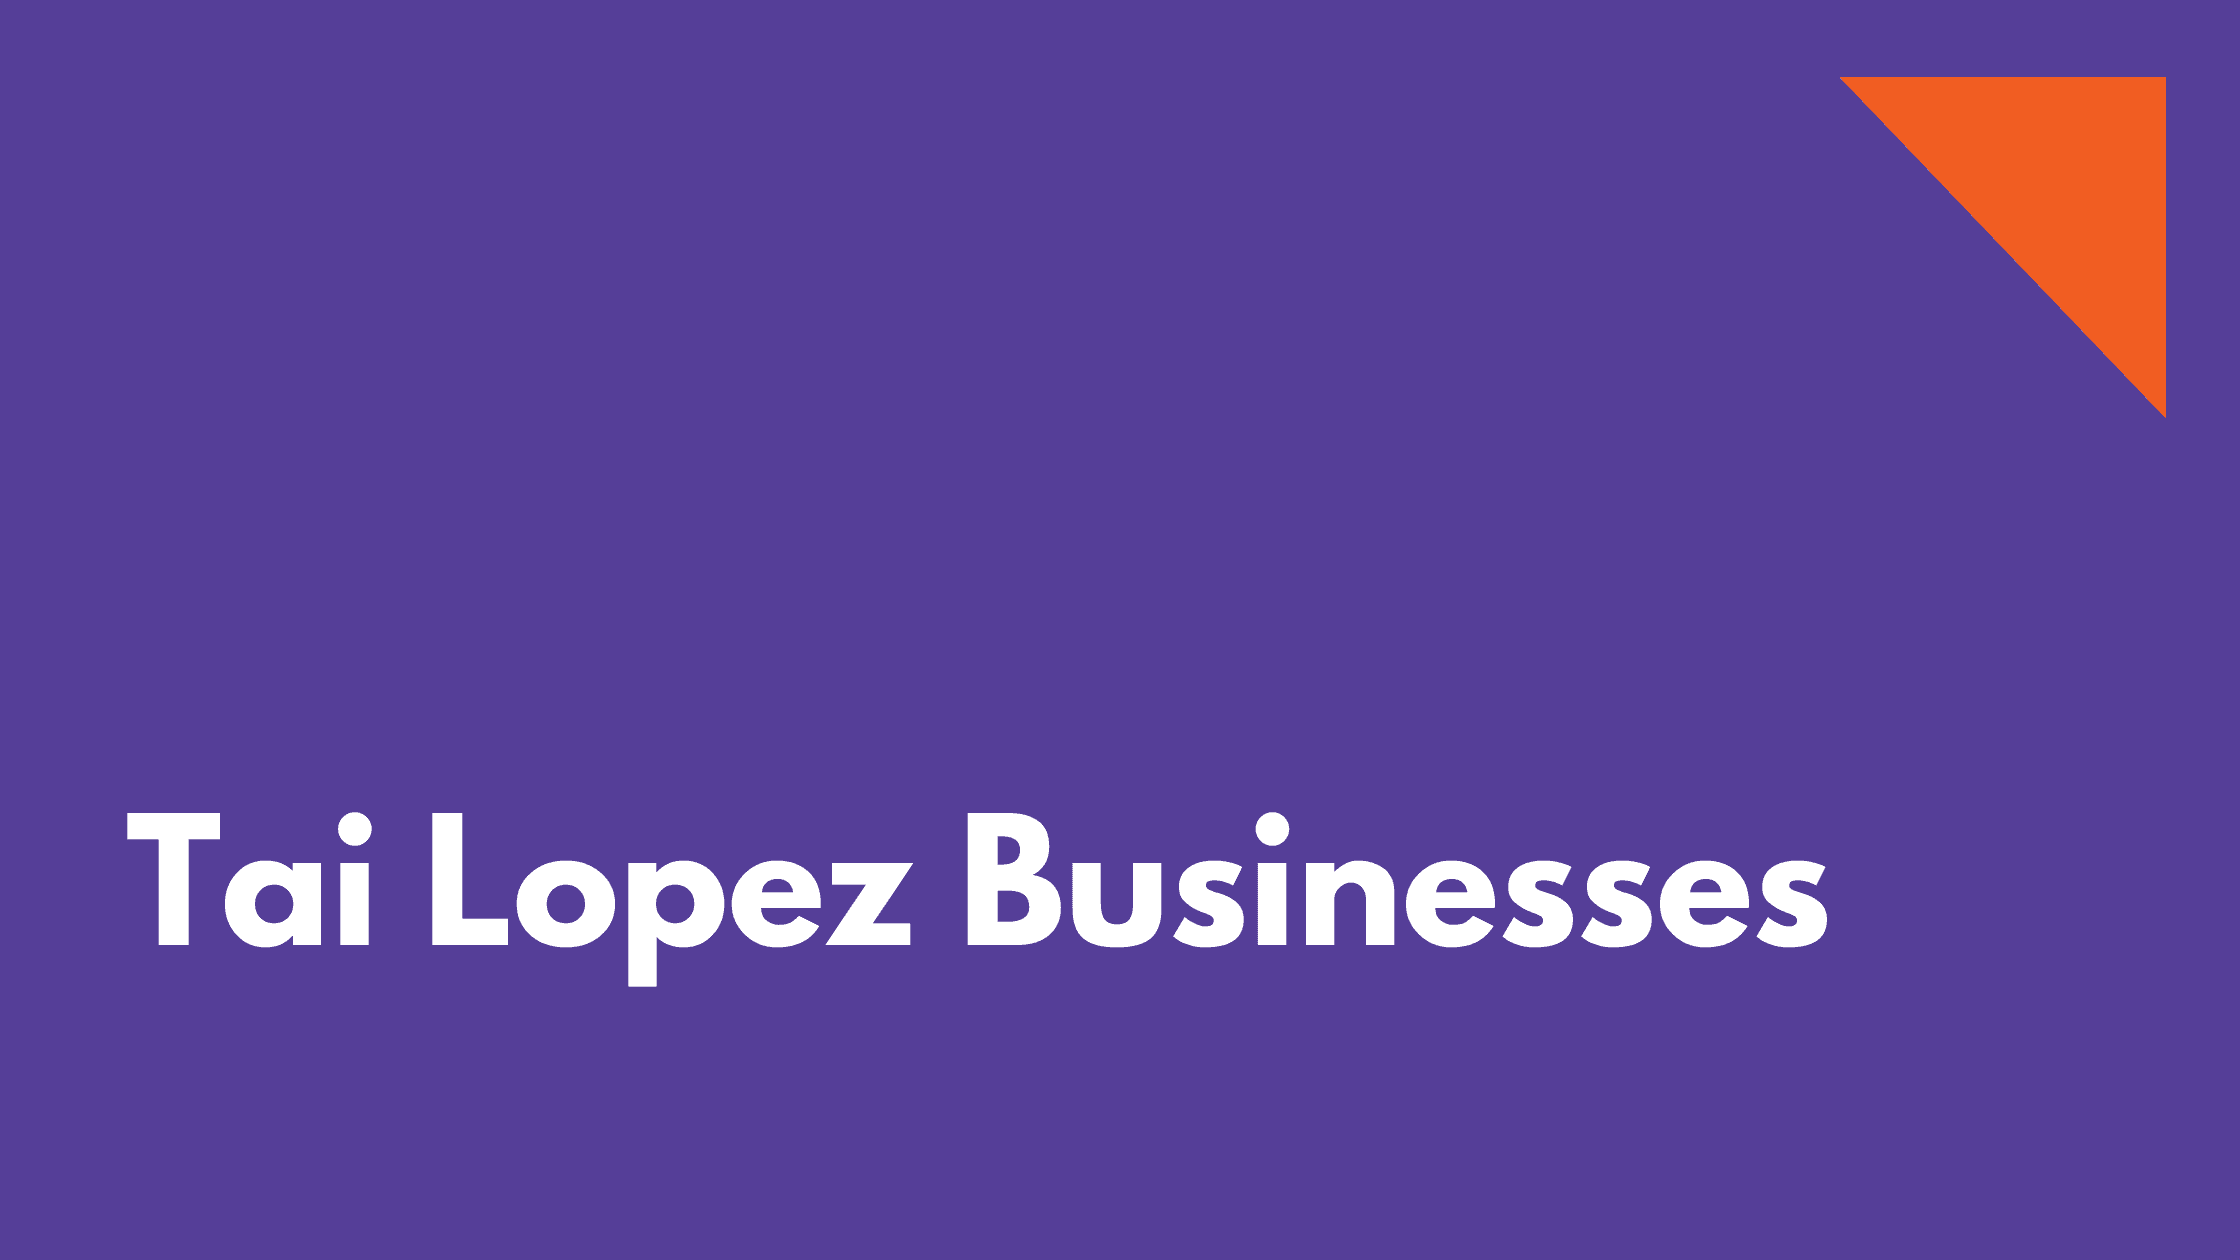 Tai Lopez businesses